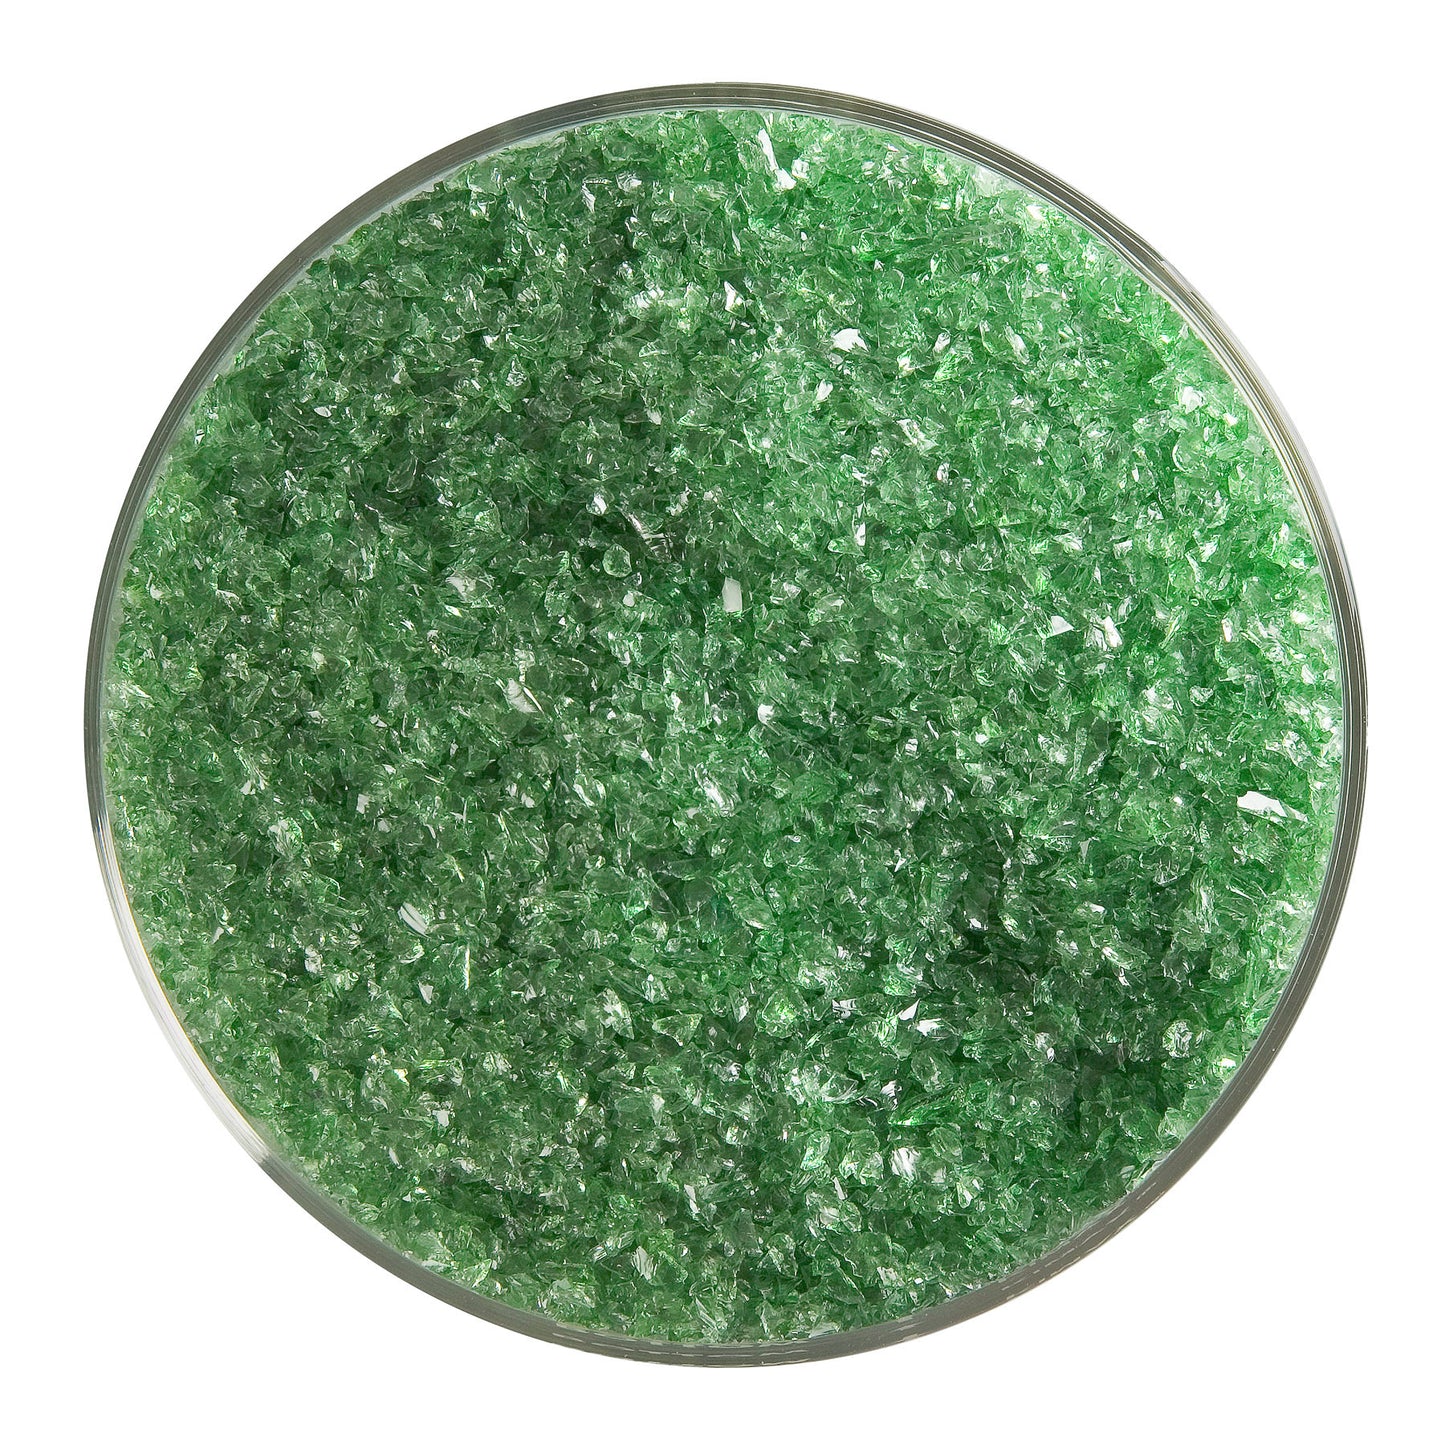 Light Green Trans (1107), Frit, Fusible, 5 oz. jar